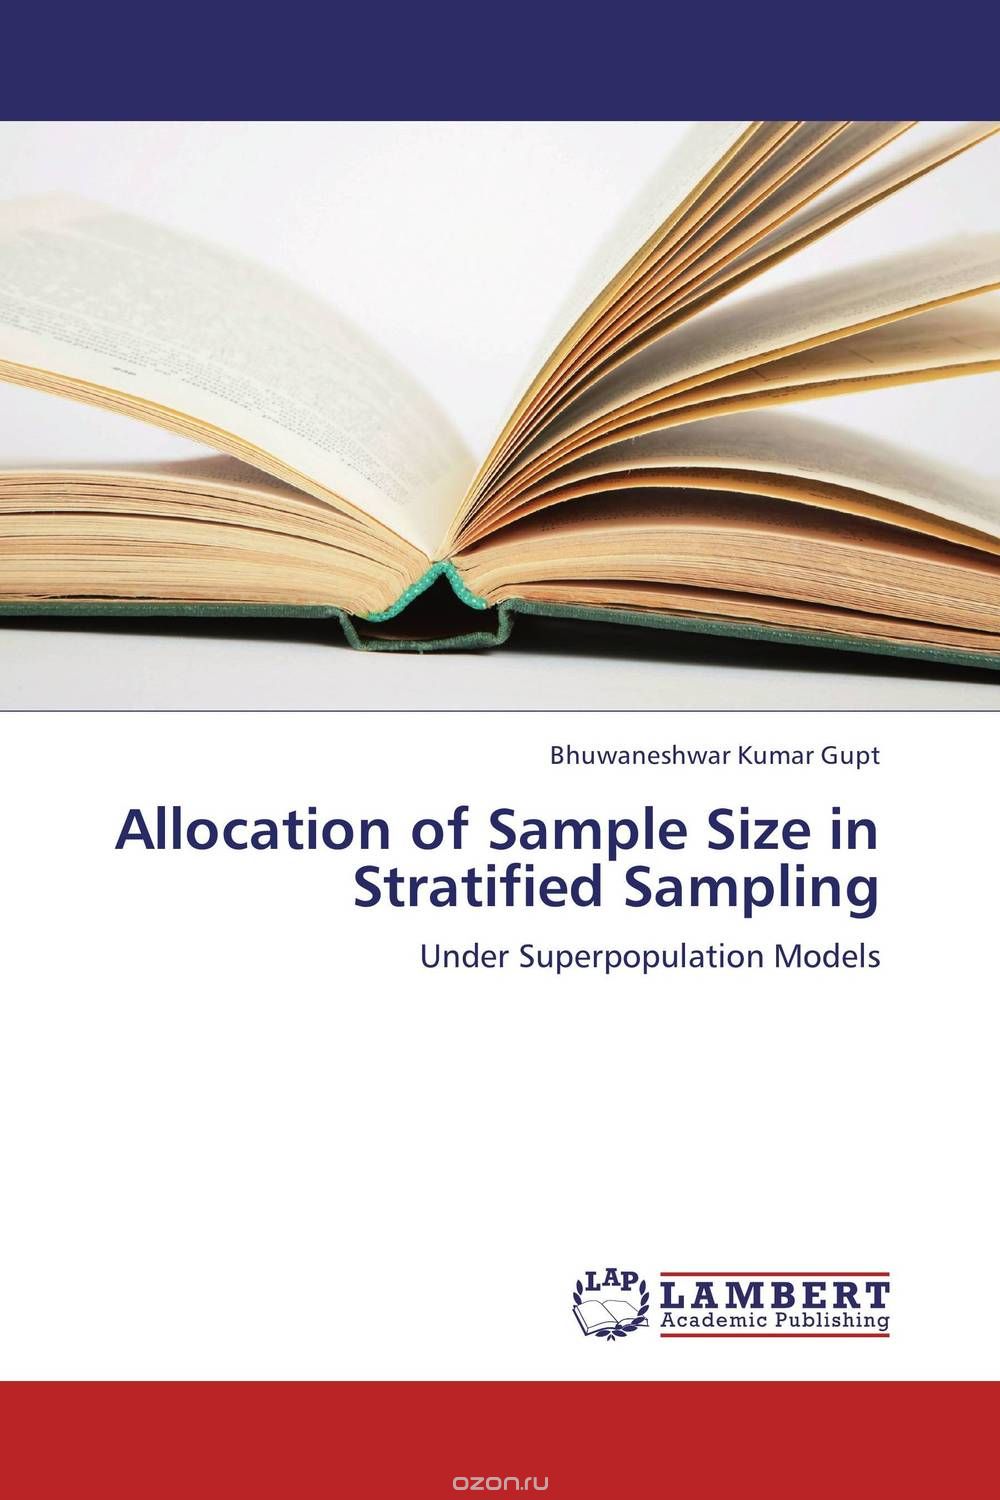 Скачать книгу "Allocation of Sample Size in Stratified Sampling"